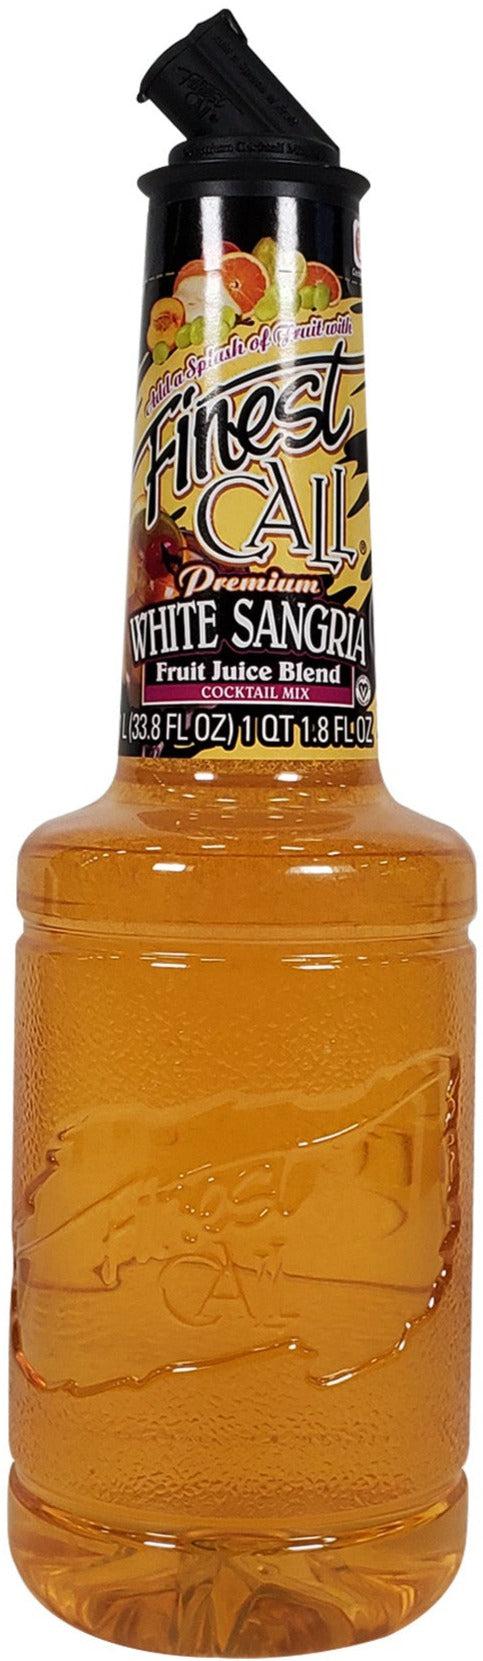 Finest Call White Sangria